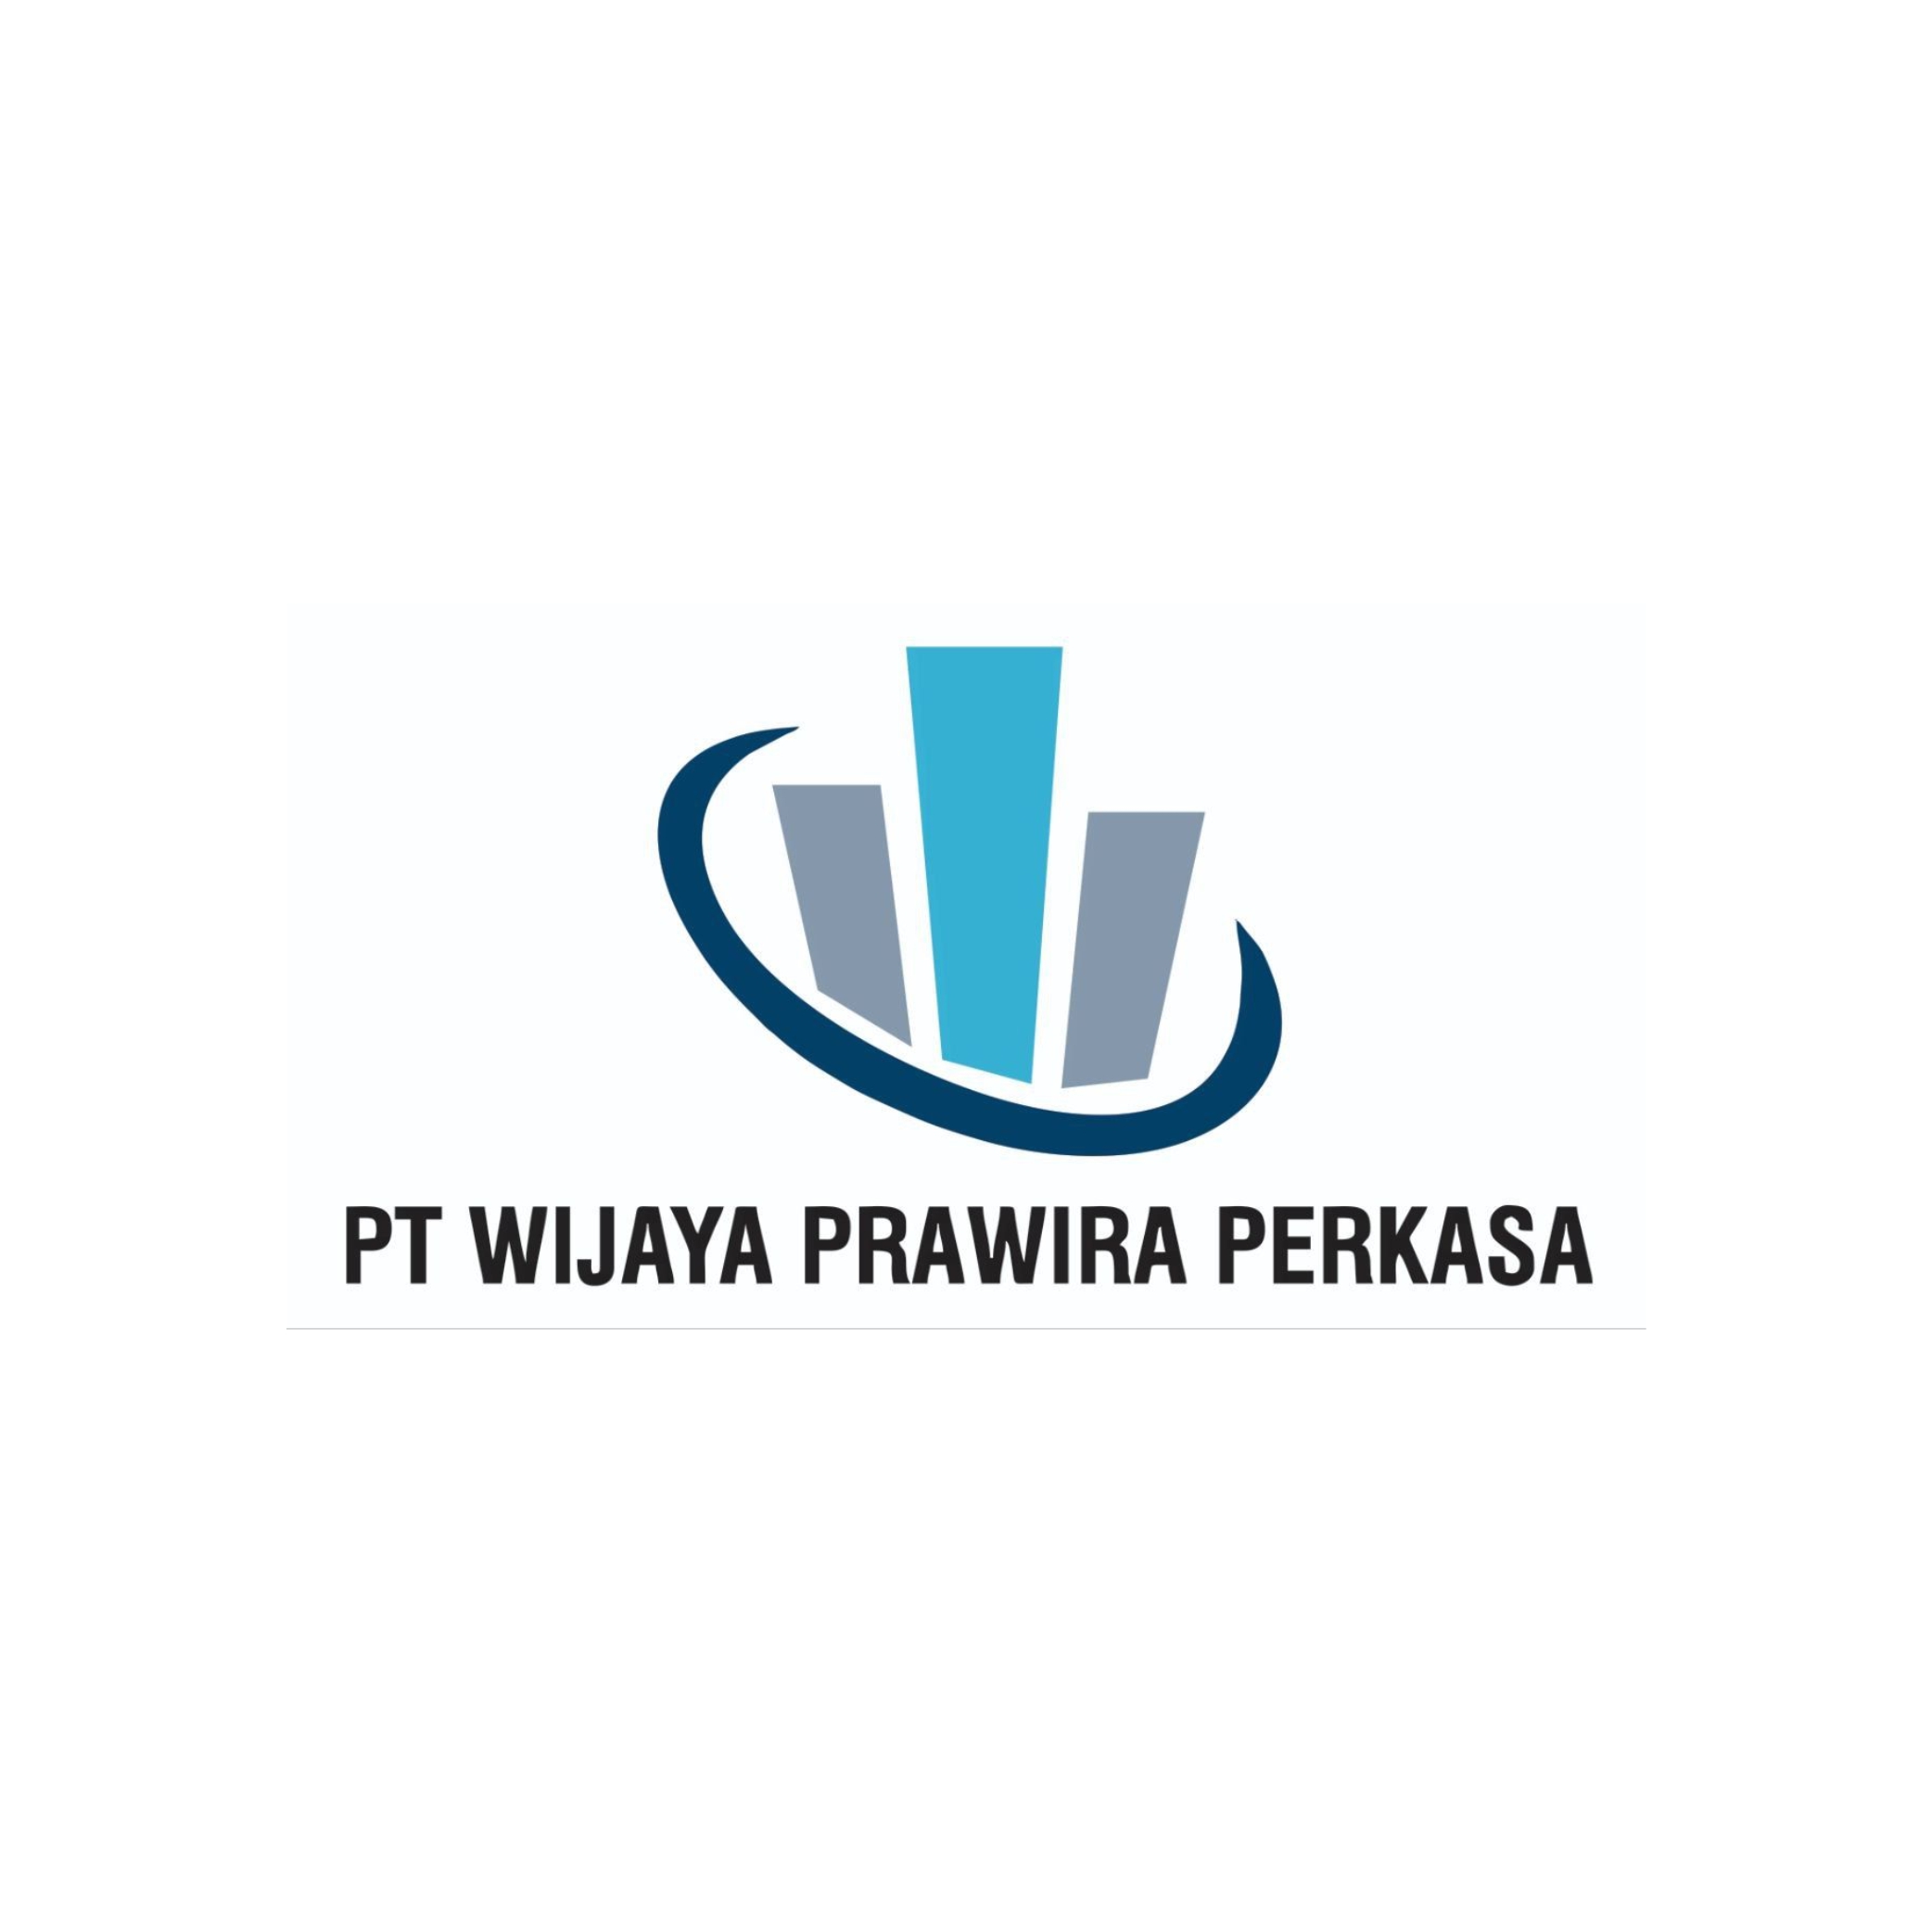 PT. Wijaya Prawira Perkasa